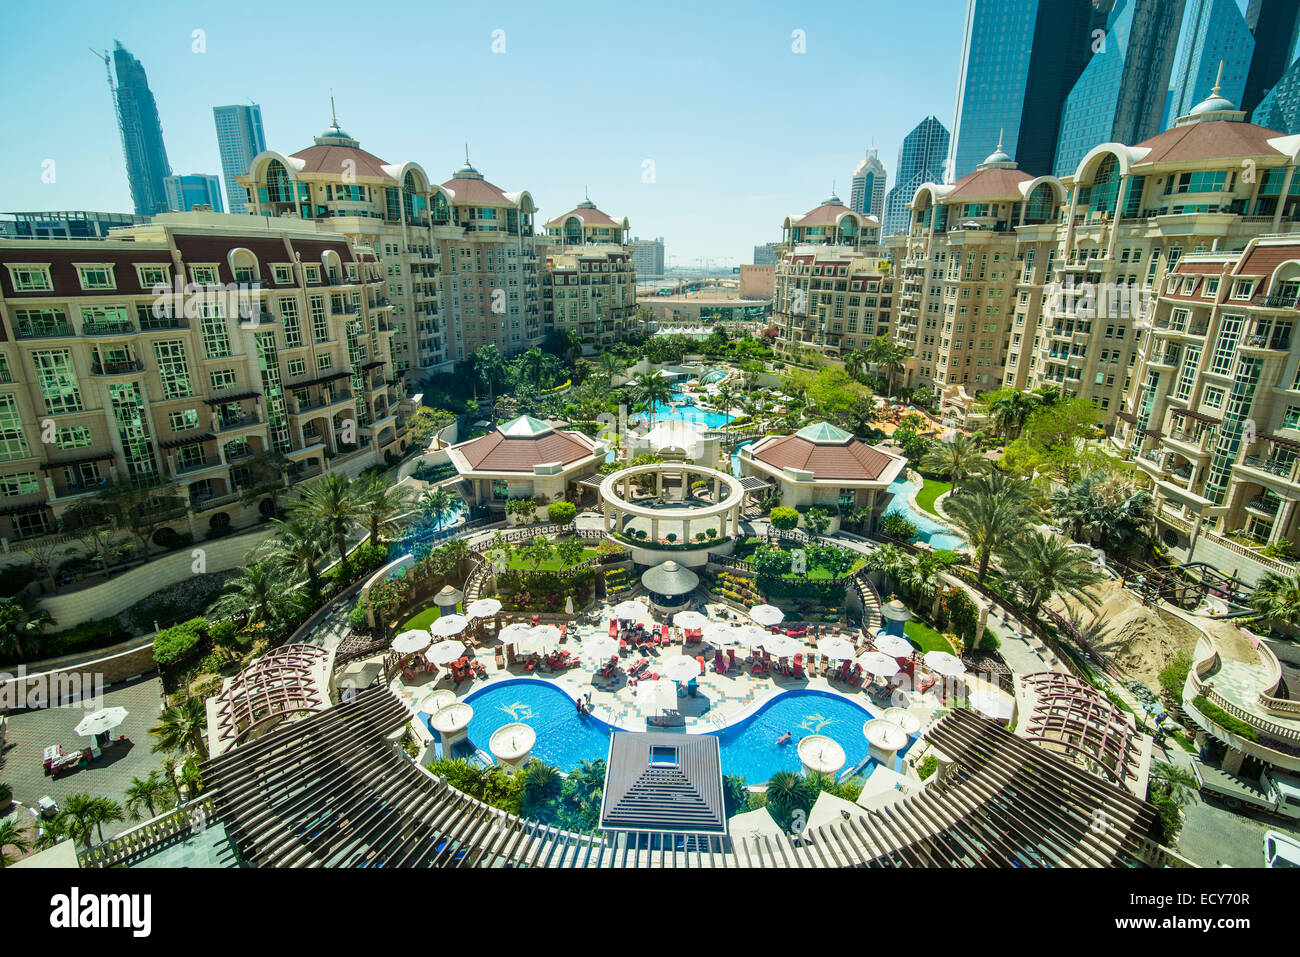 Al Murooj Rotana, five star hotel complex, Dubai, United Arab Emirates Stock Photo